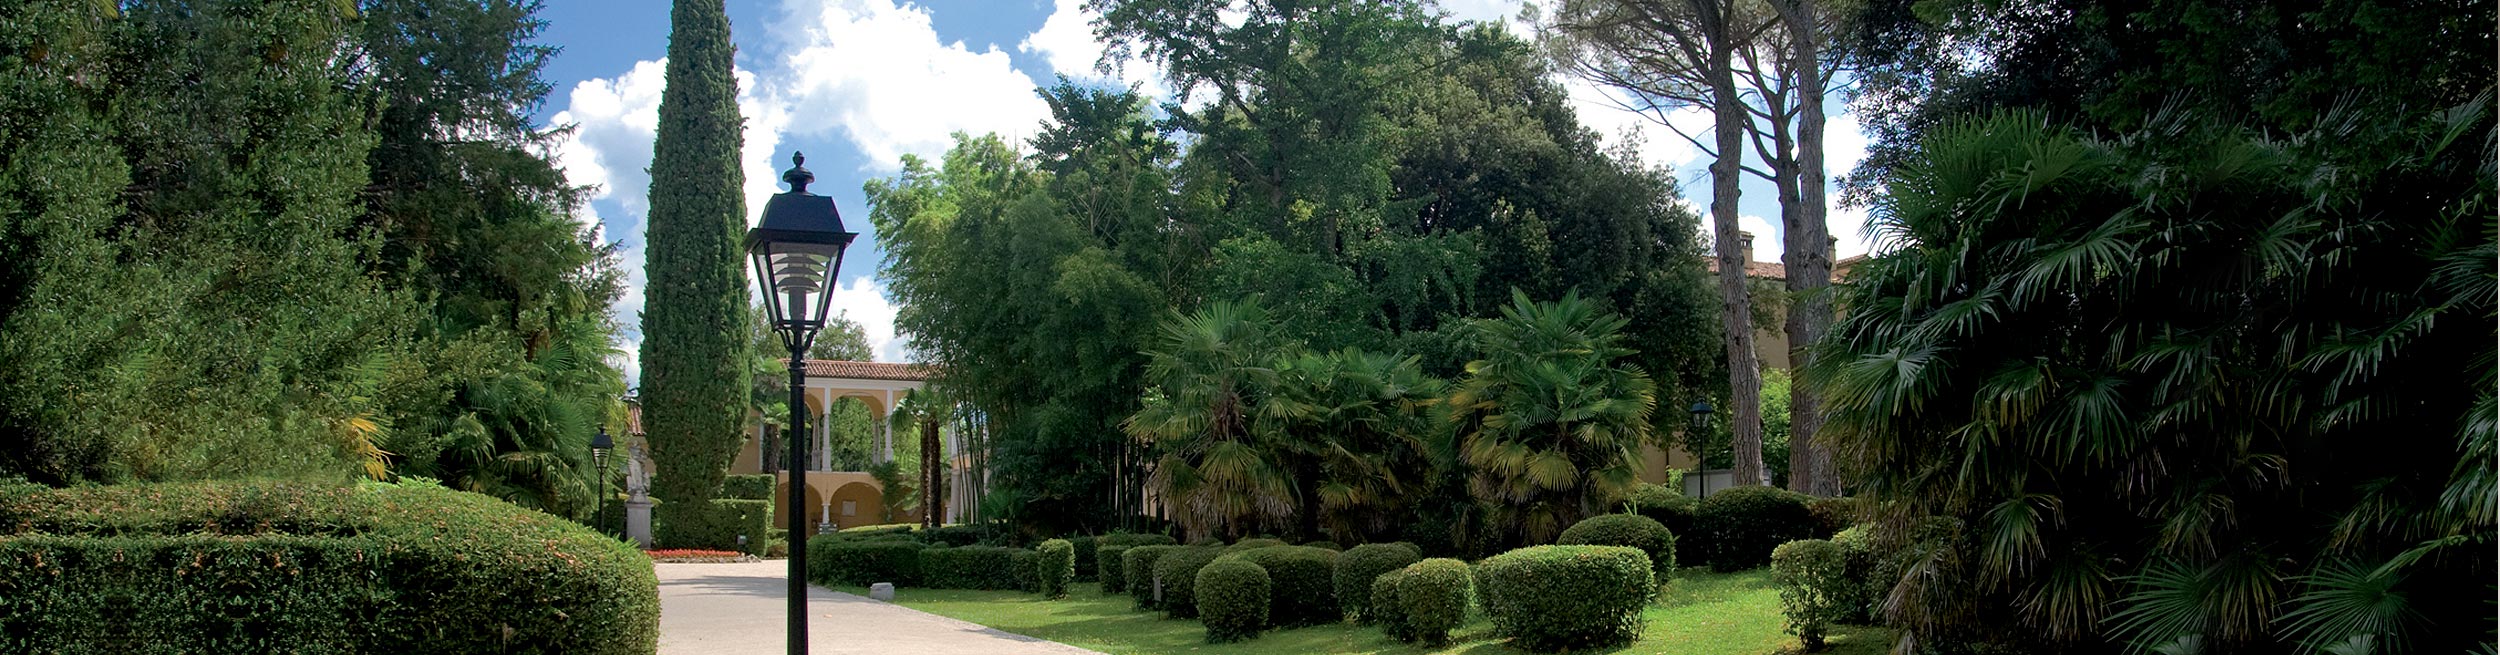 Parco Coronini